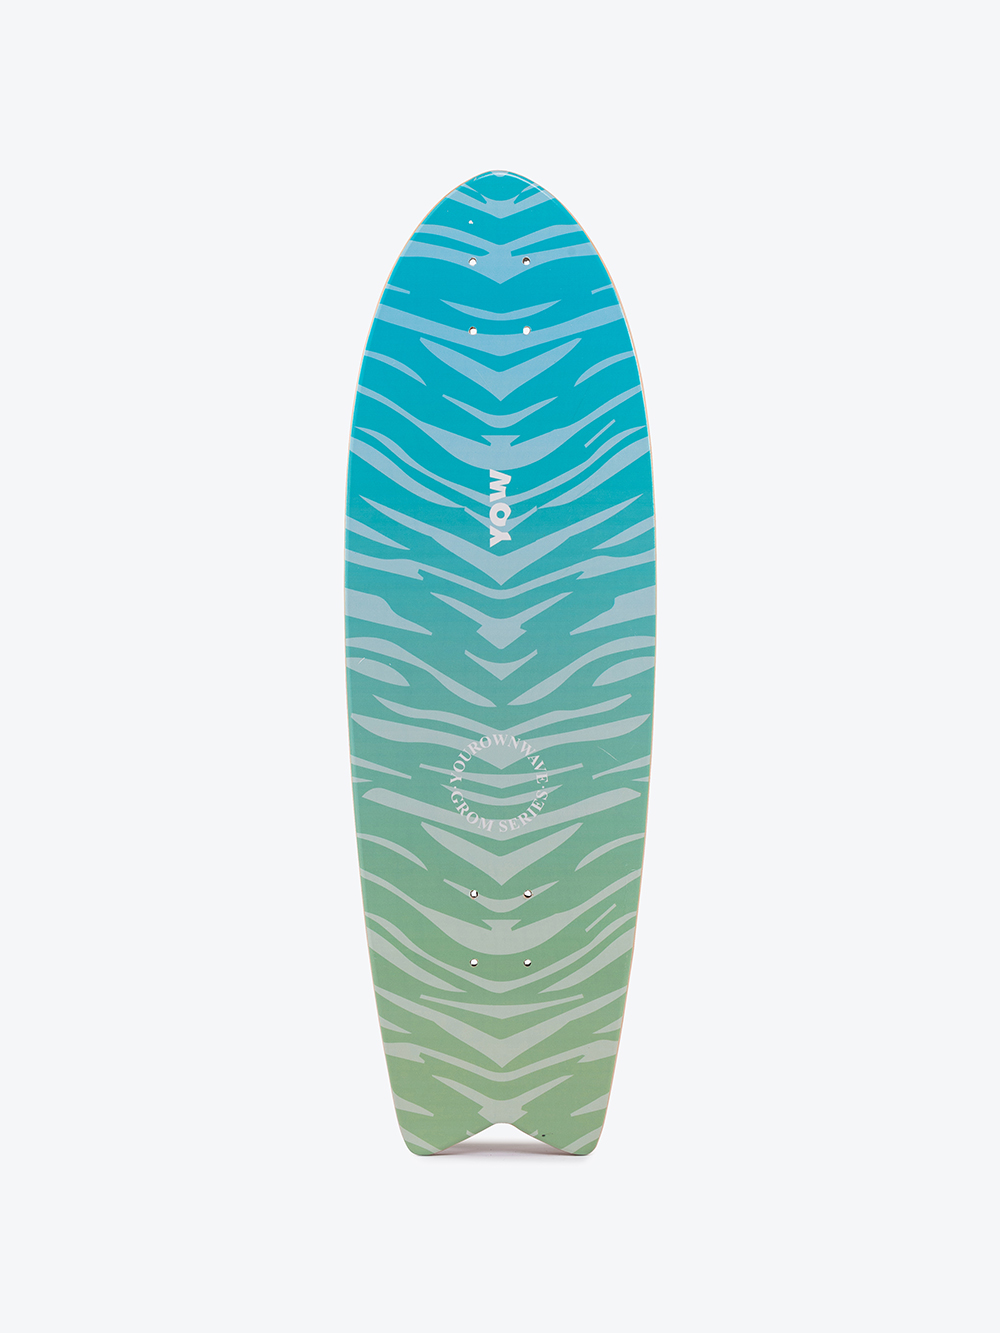 yow-grom-huntington-30-surfskate-deck-bottom